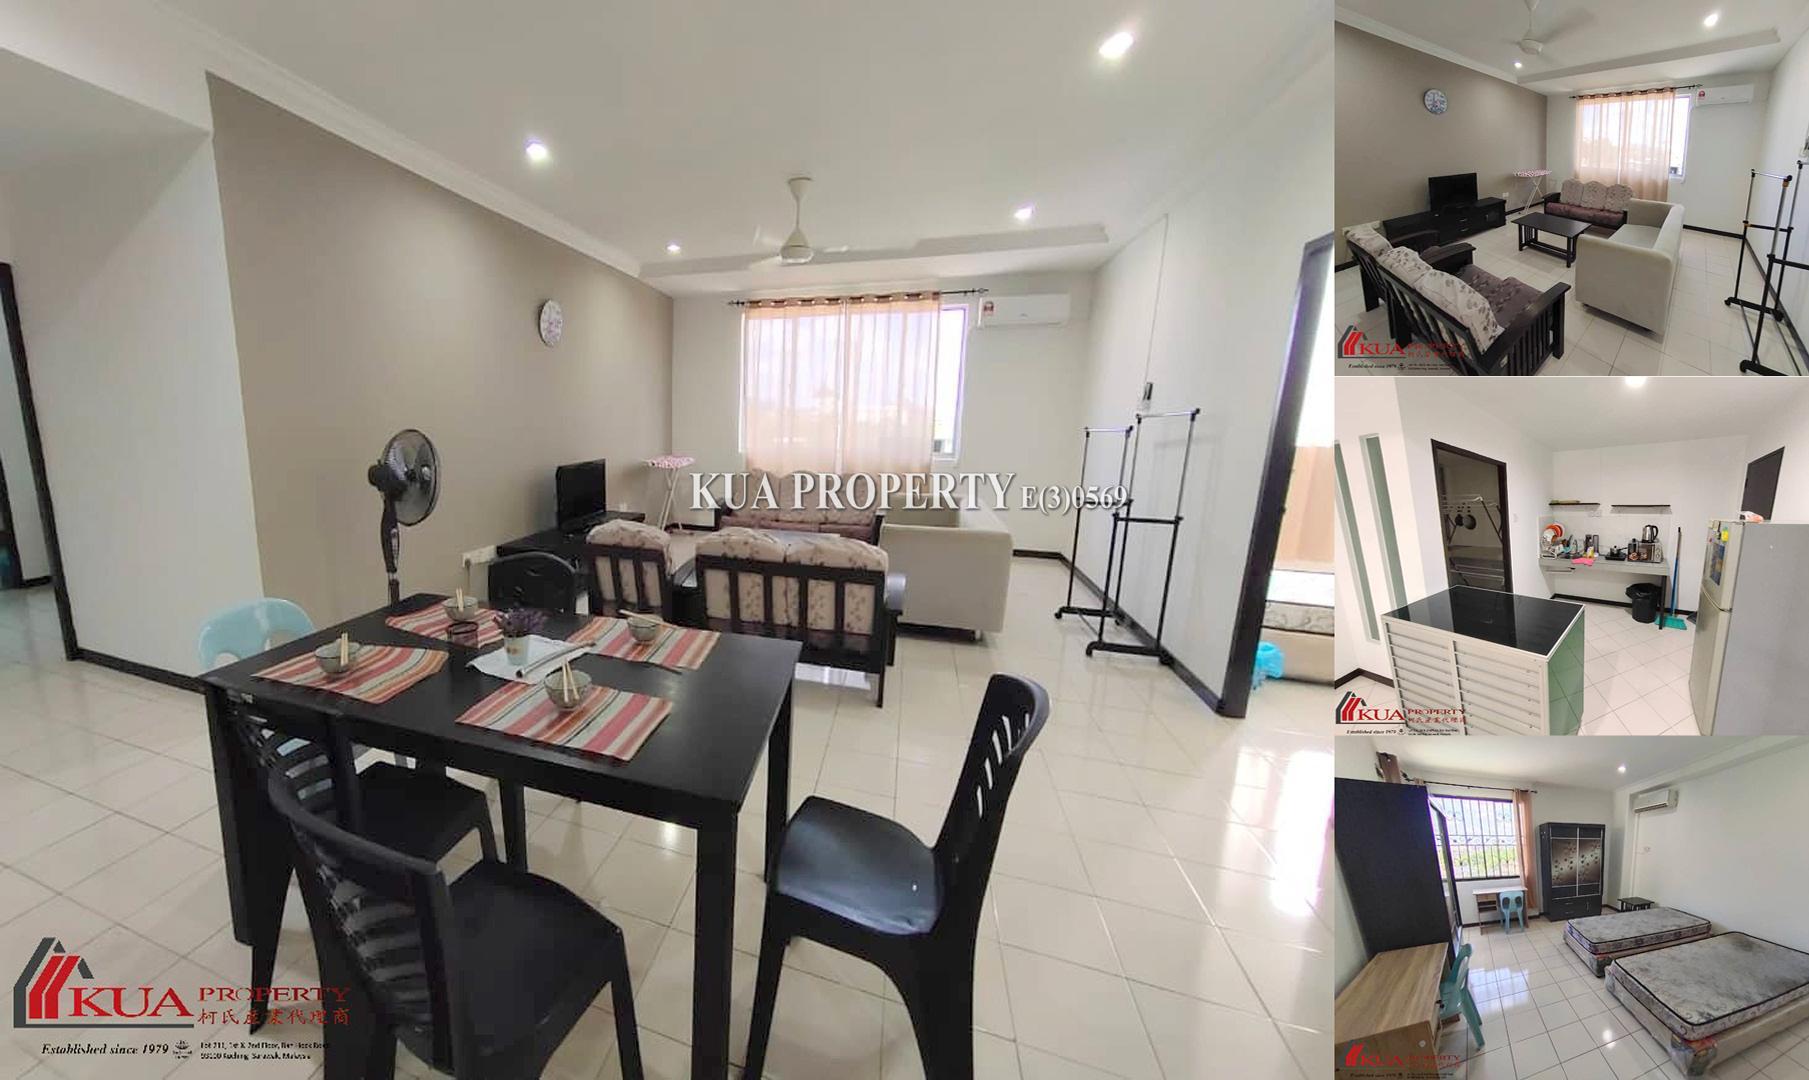 Floridale Condominium For Rent! at Jalan Wan Alwi, Kuching